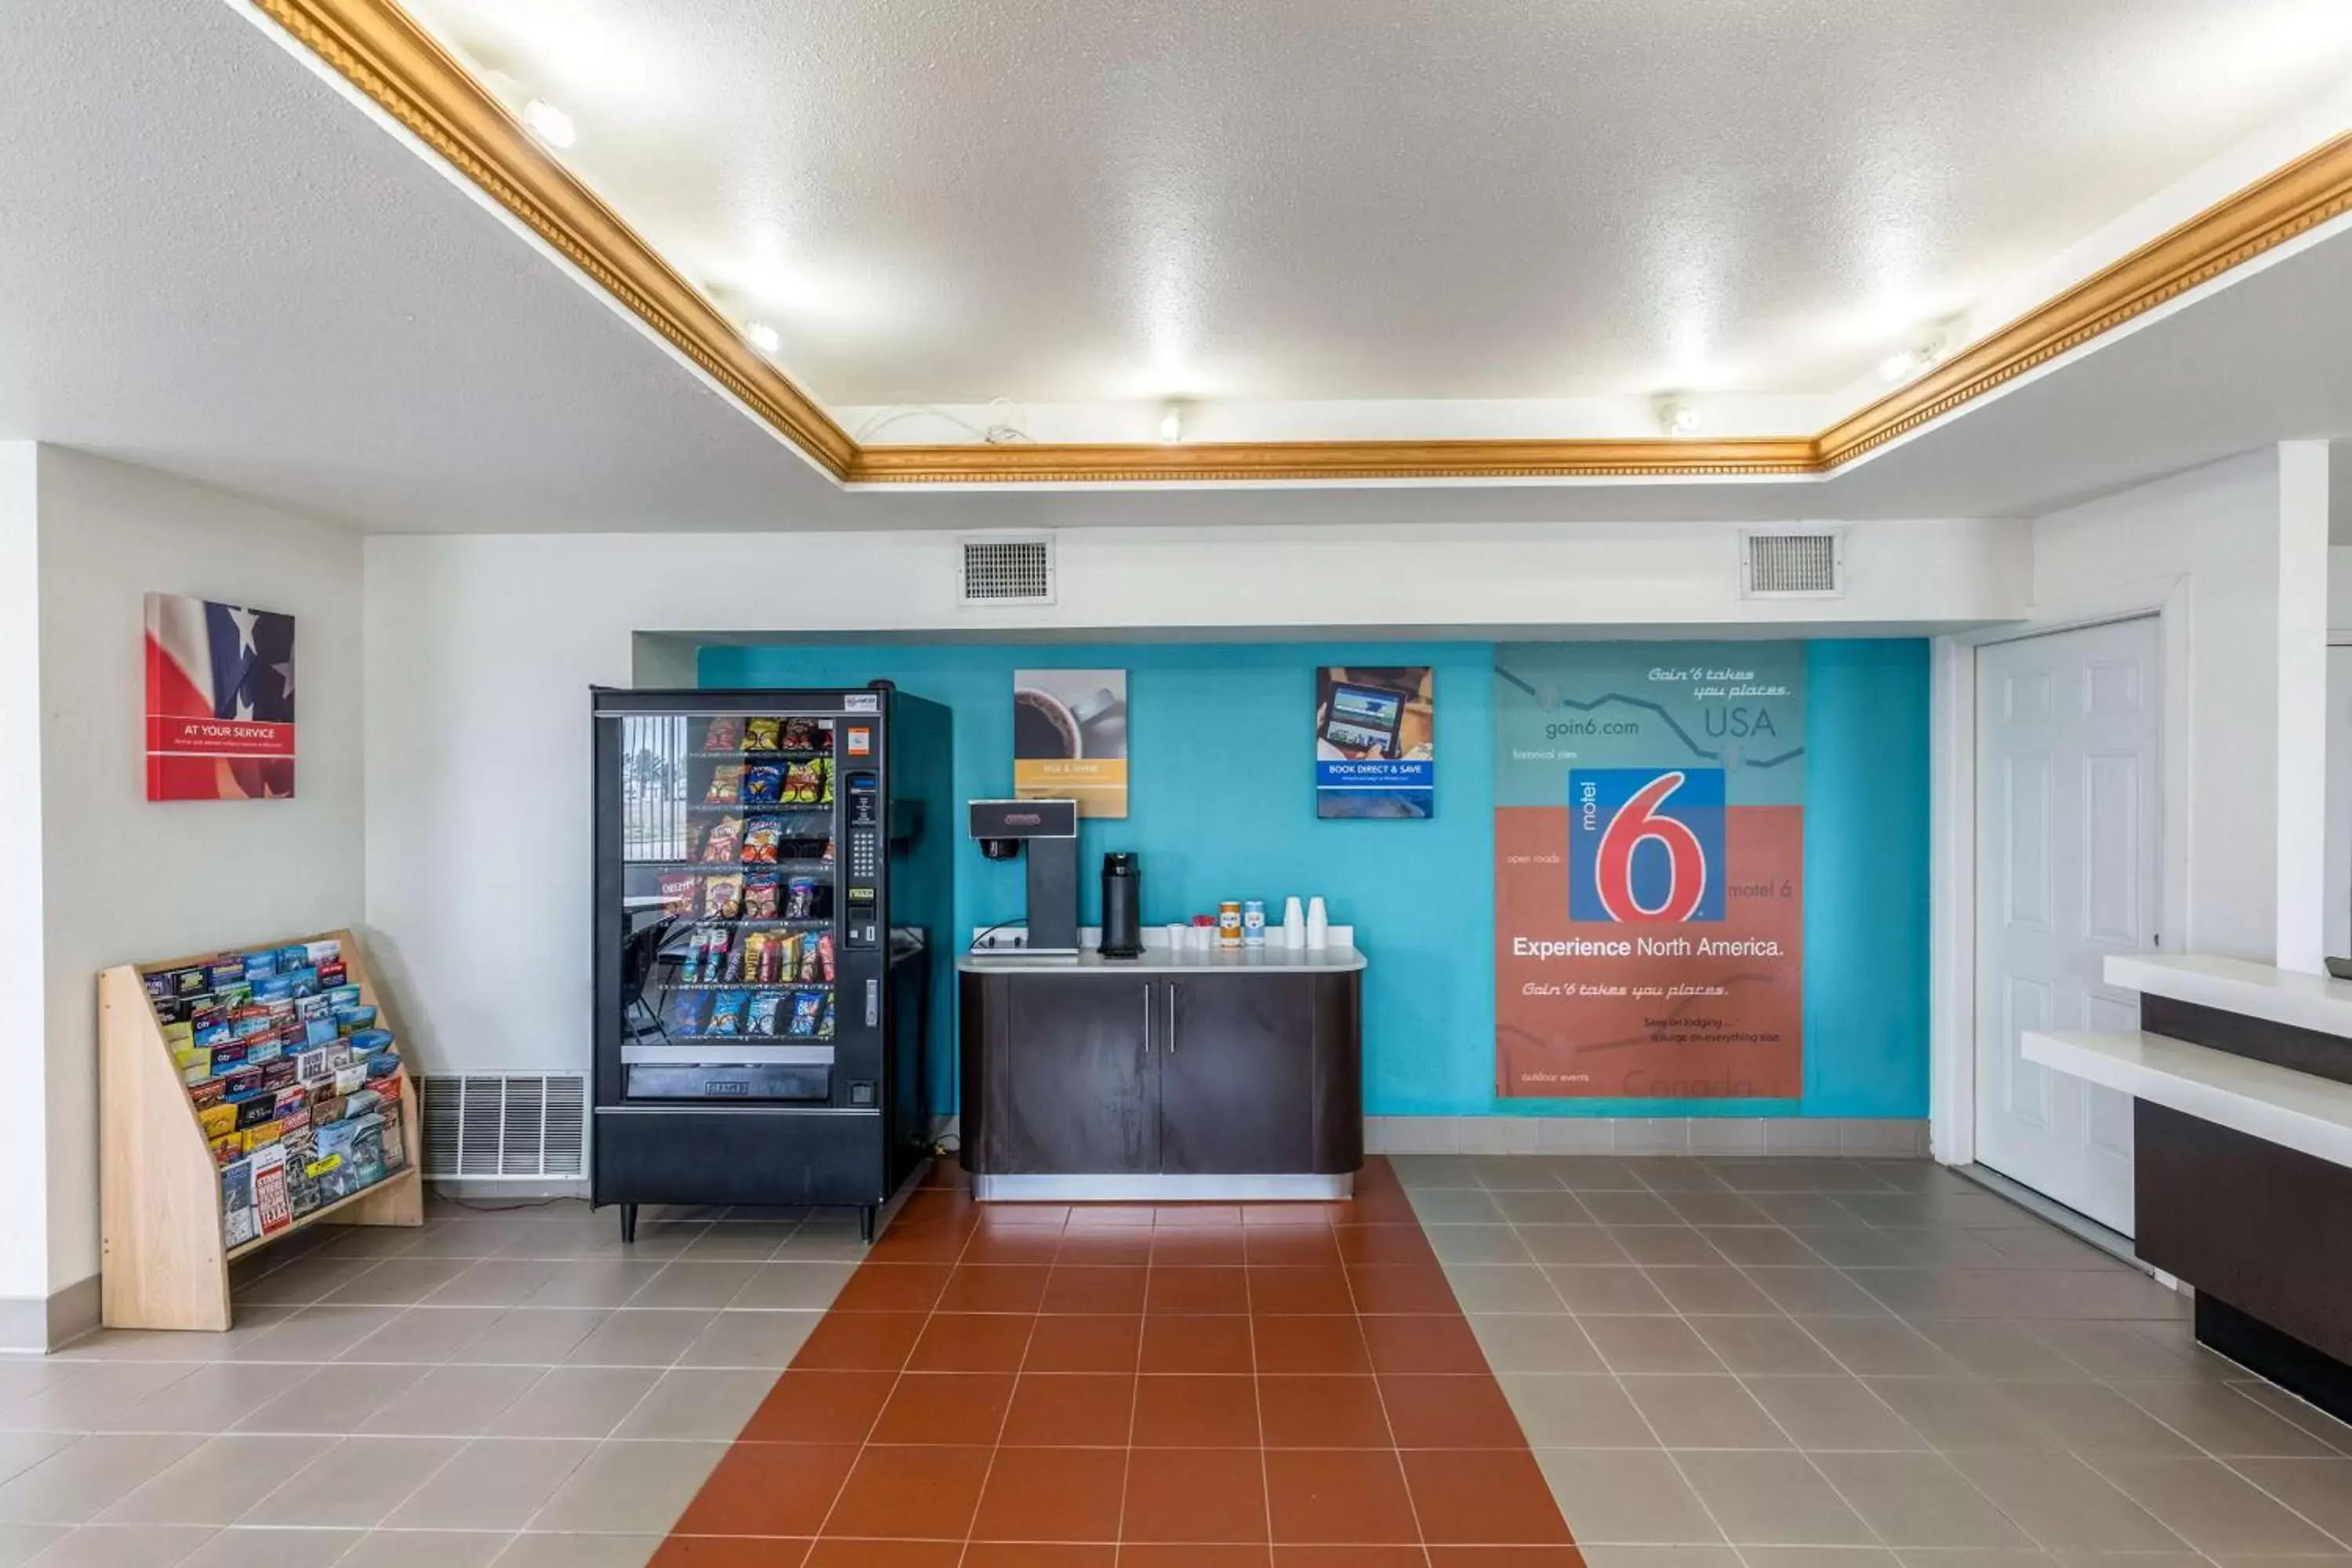 Coffee/tea facilities, Lobby/Reception in Motel 6 Port Lavaca, TX